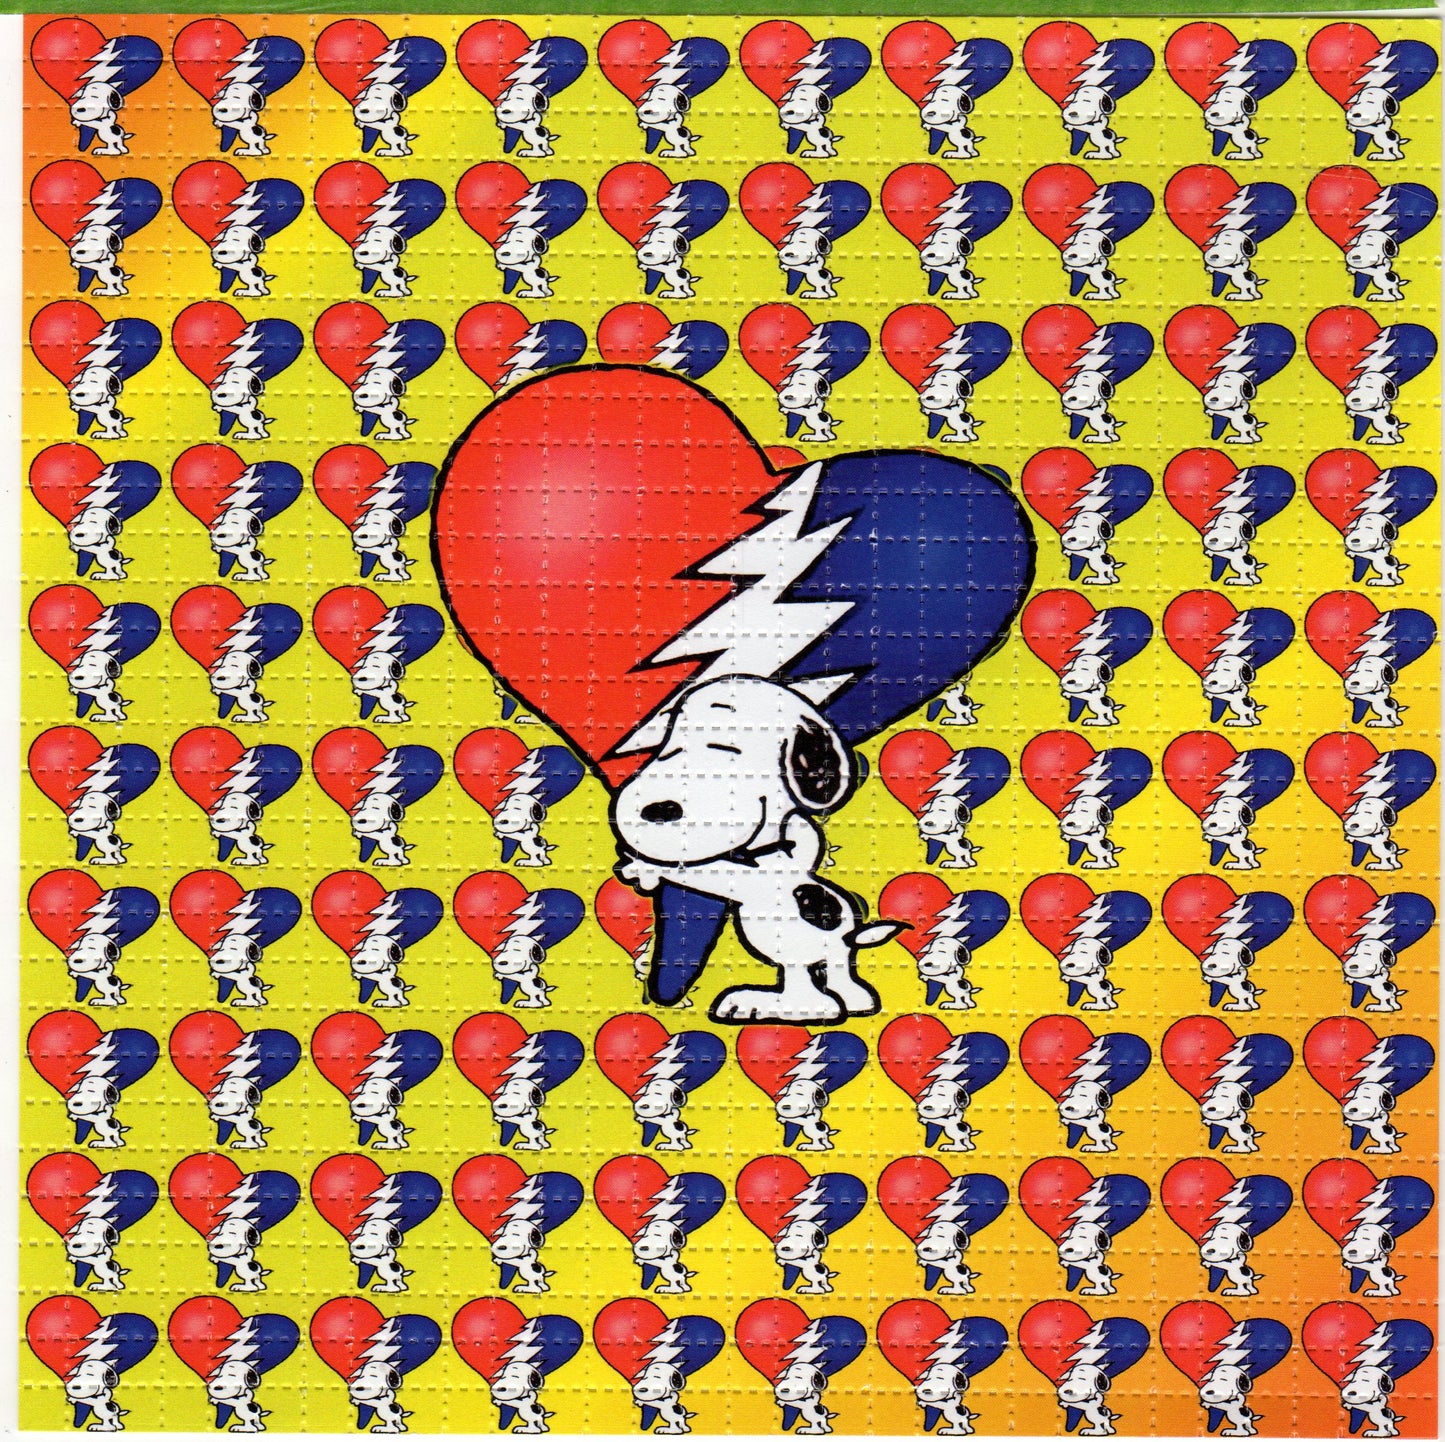 Grateful Snoop-Hearts LSD blotter art print